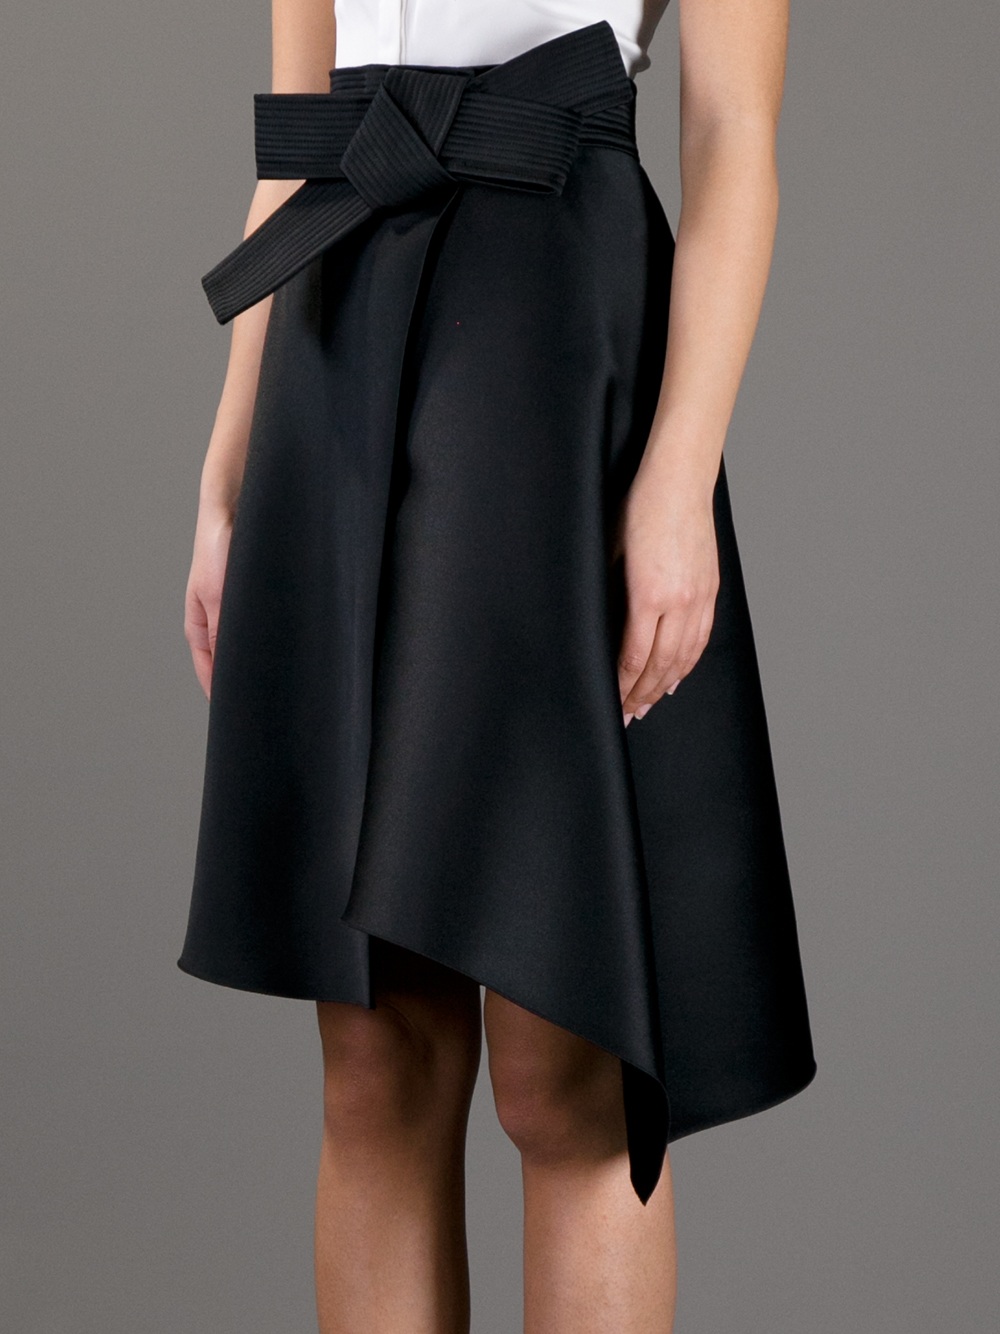 Lanvin Bow Skirt in Black - Lyst